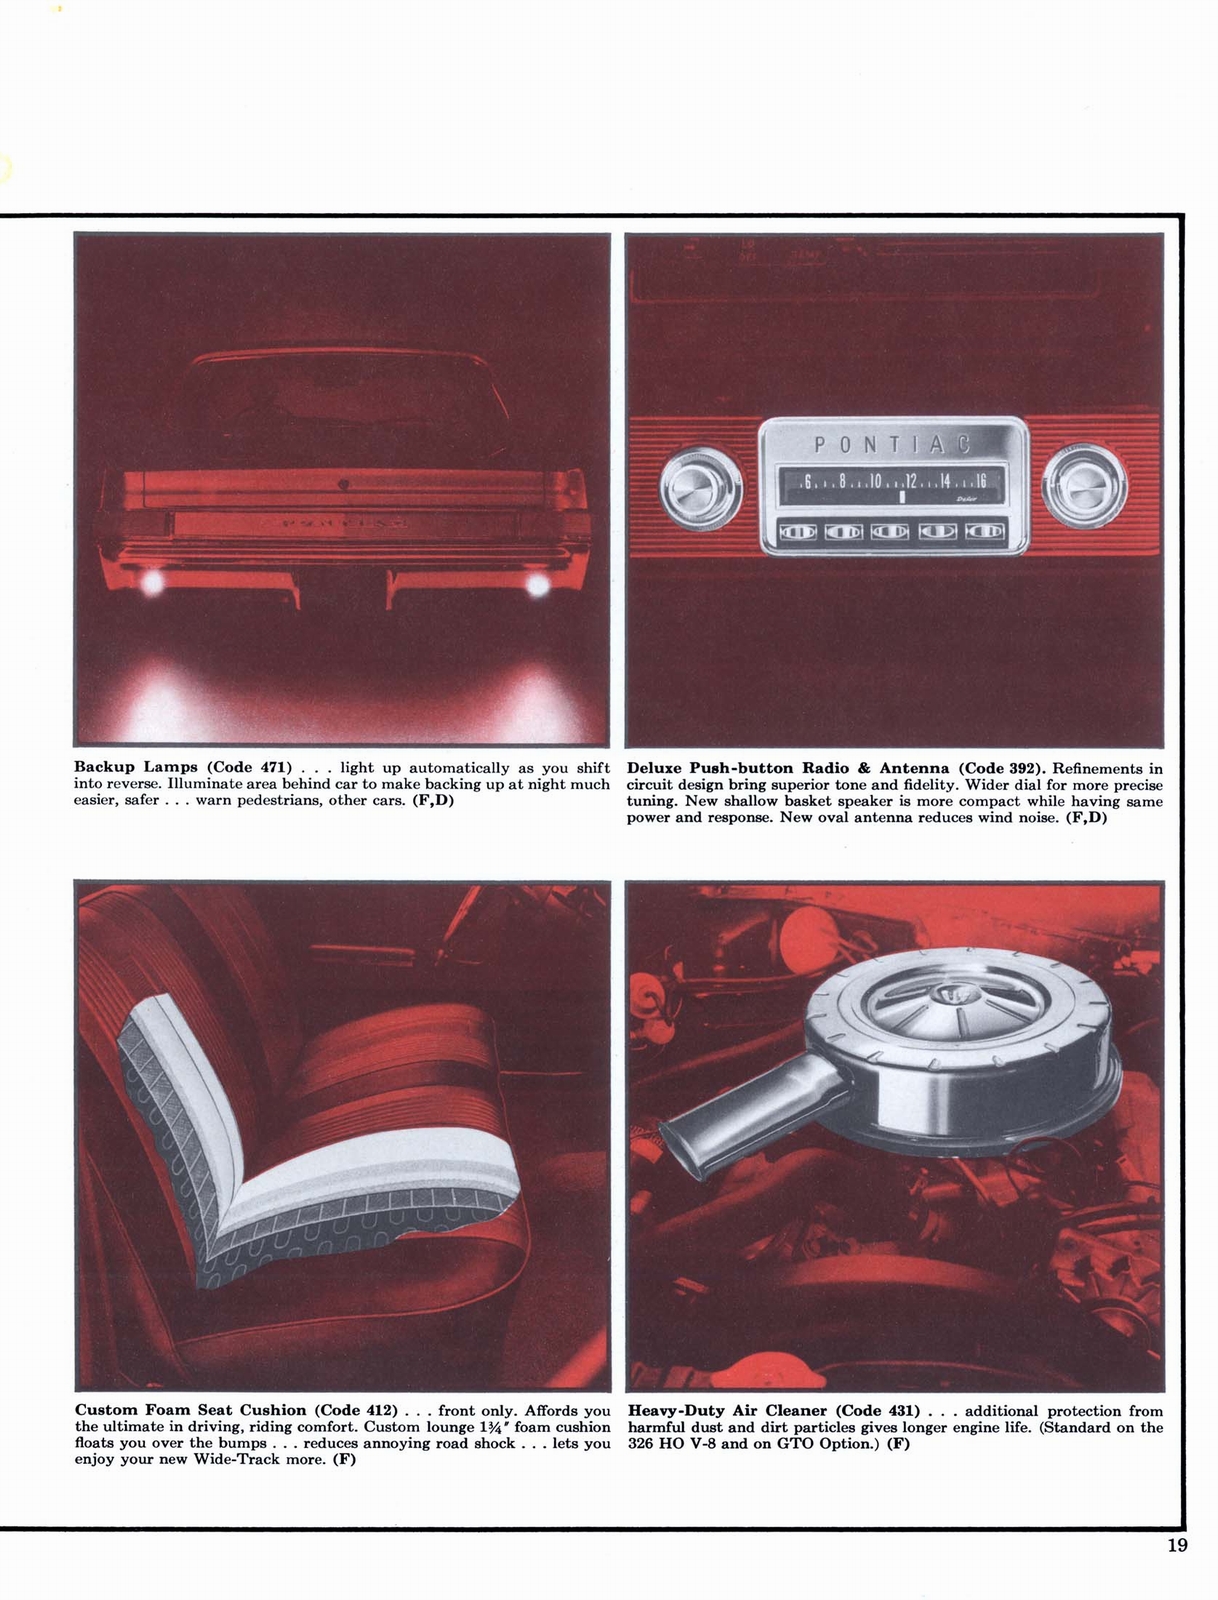 n_1965 Pontiac Accessories Catalog-19.jpg